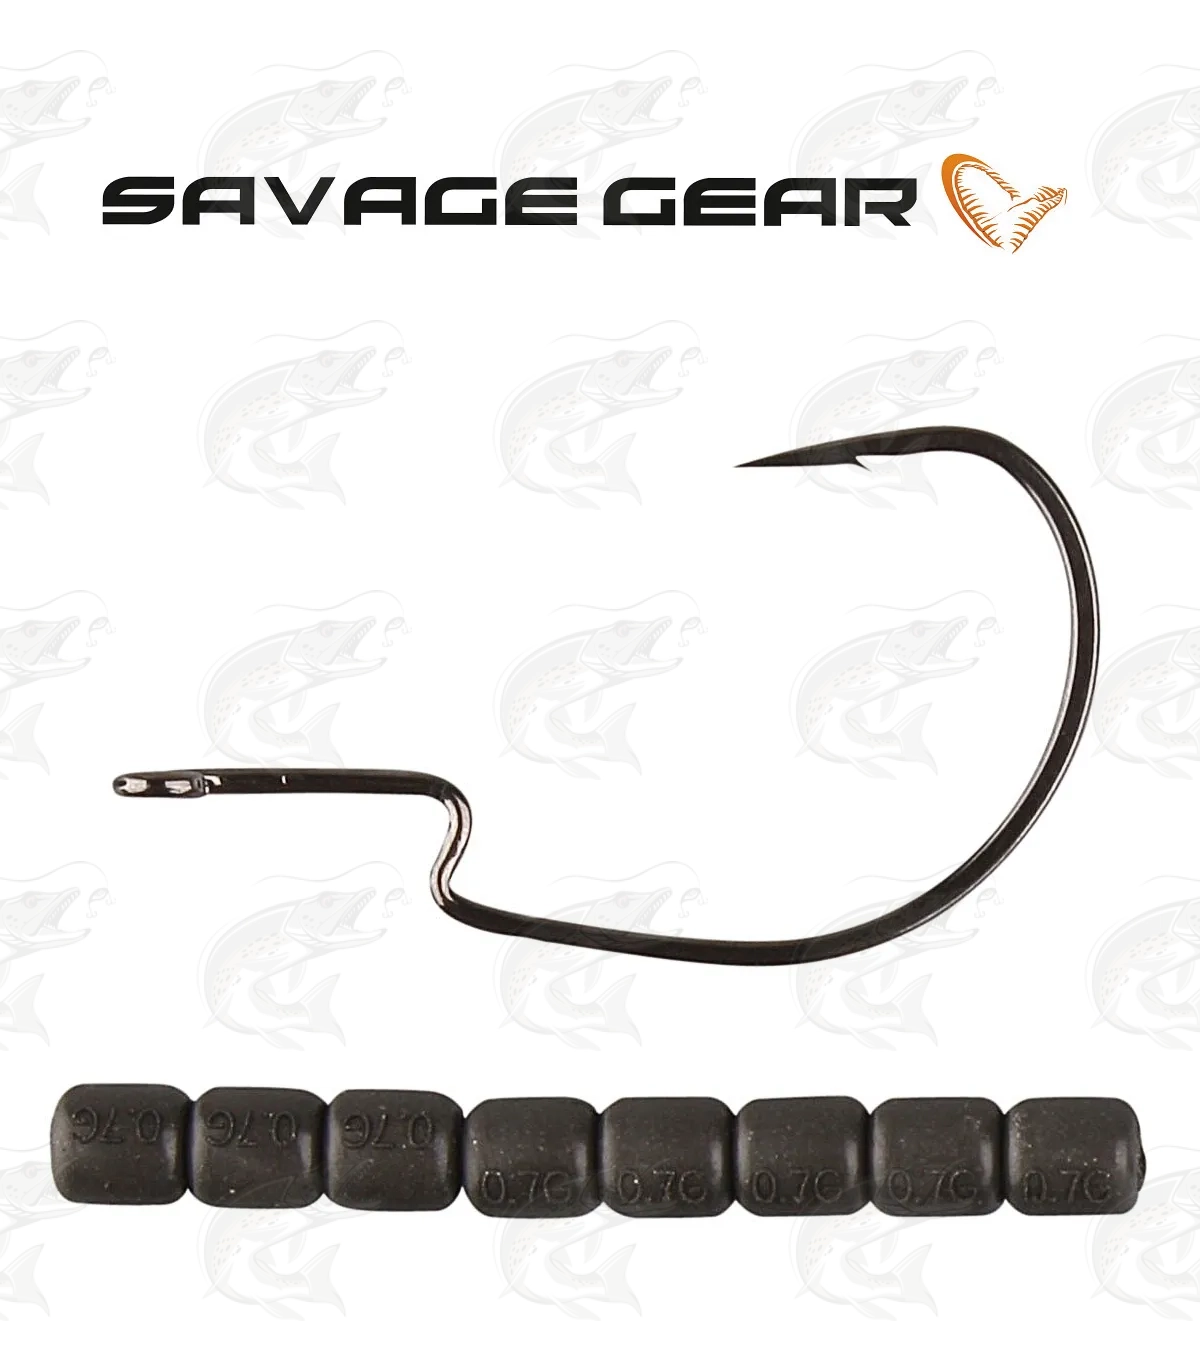 Savage Gear Armor Soft 4 Play Offset Treble Hooks